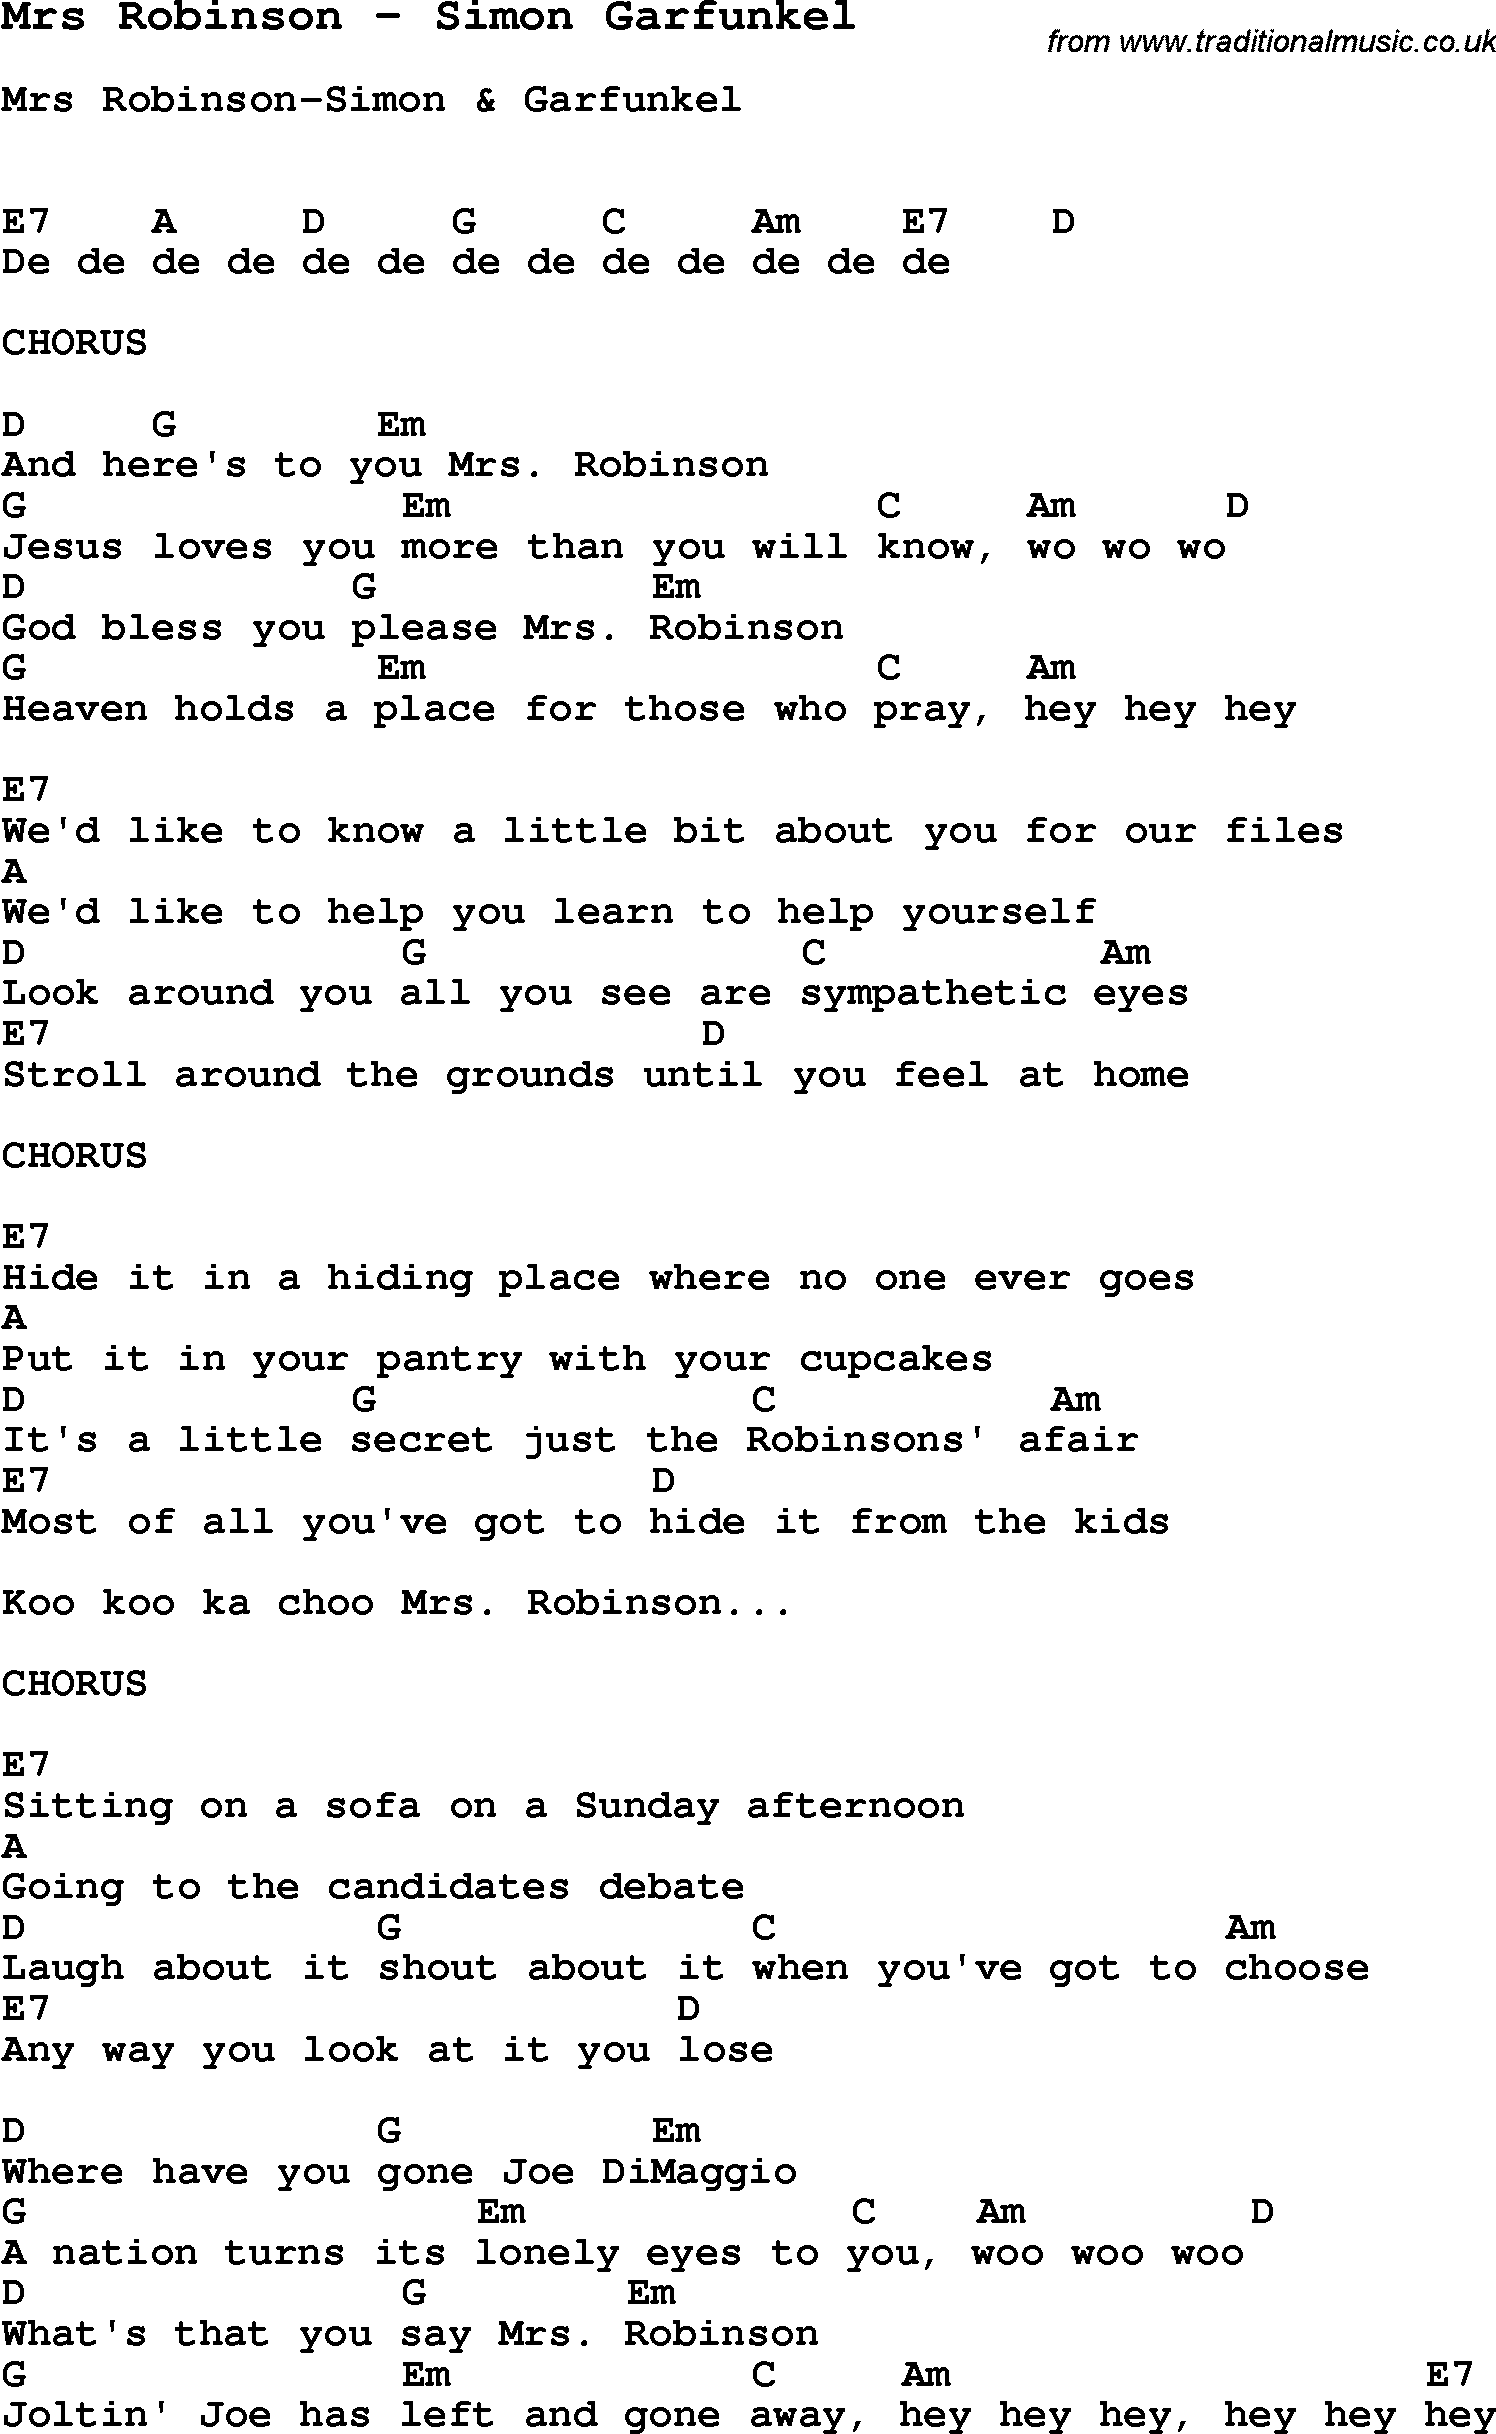 Song Mrs Robinson by Simon Garfunkel, with lyrics for vocal performance and accompaniment chords for Ukulele, Guitar Banjo etc.